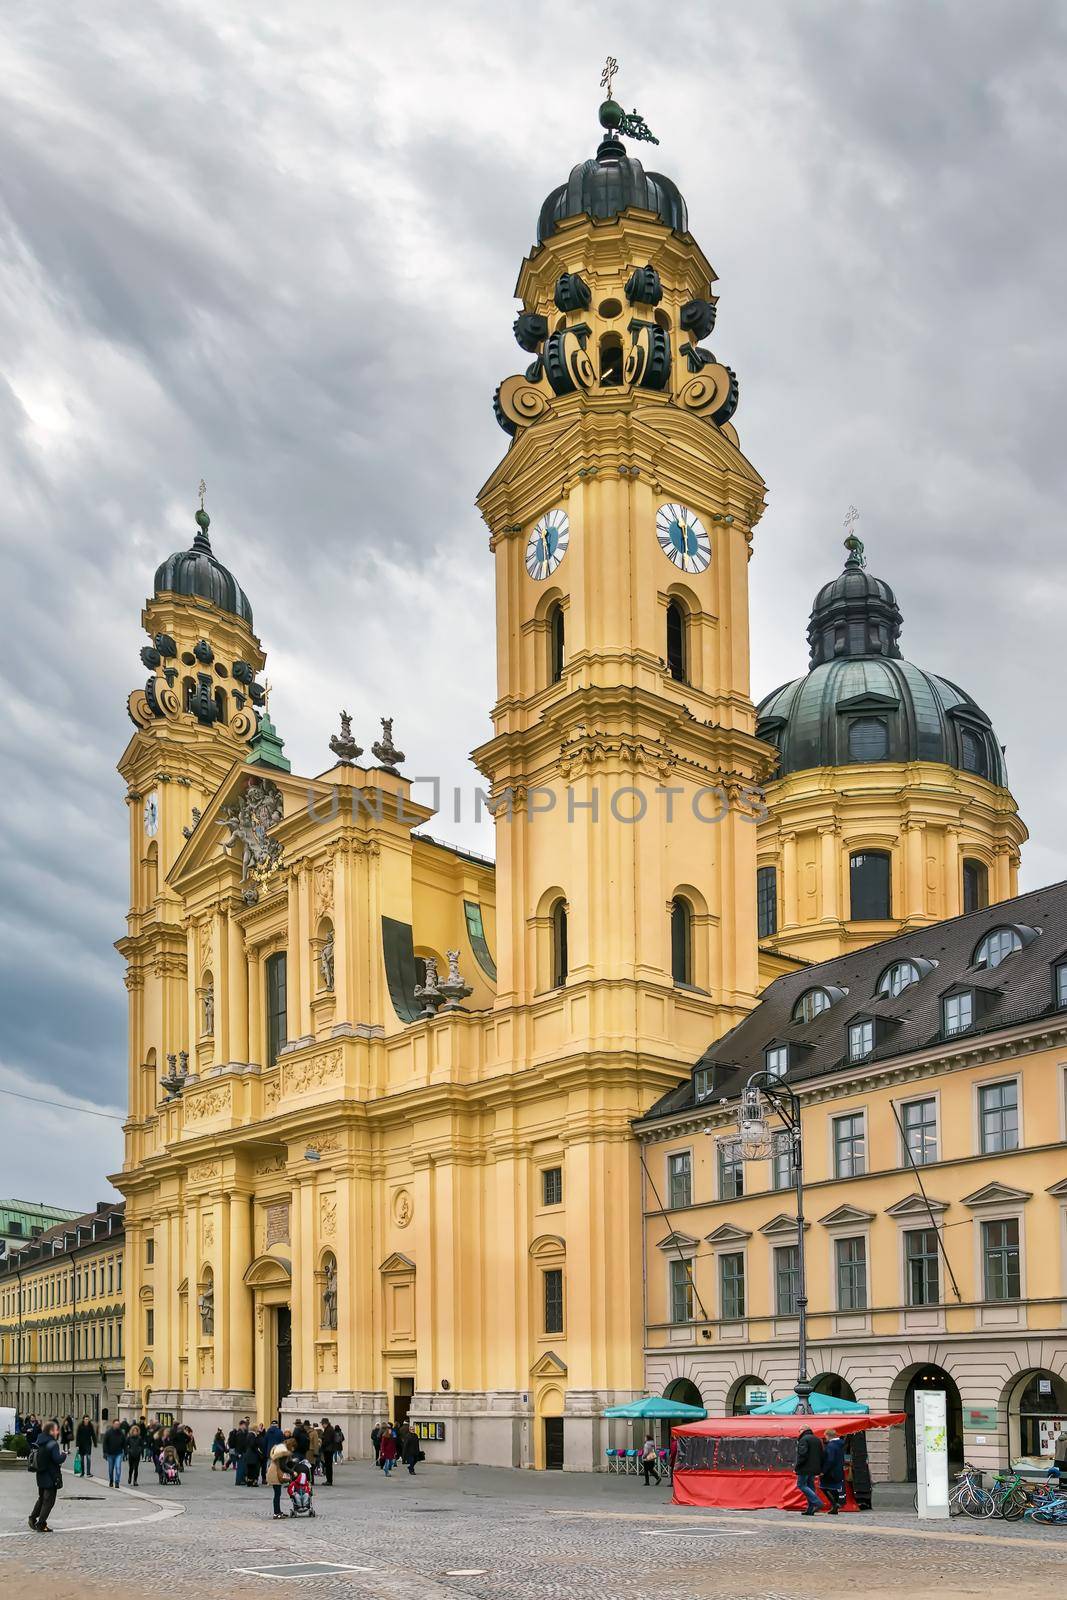 Theatine Church, Munich, Germany by borisb17